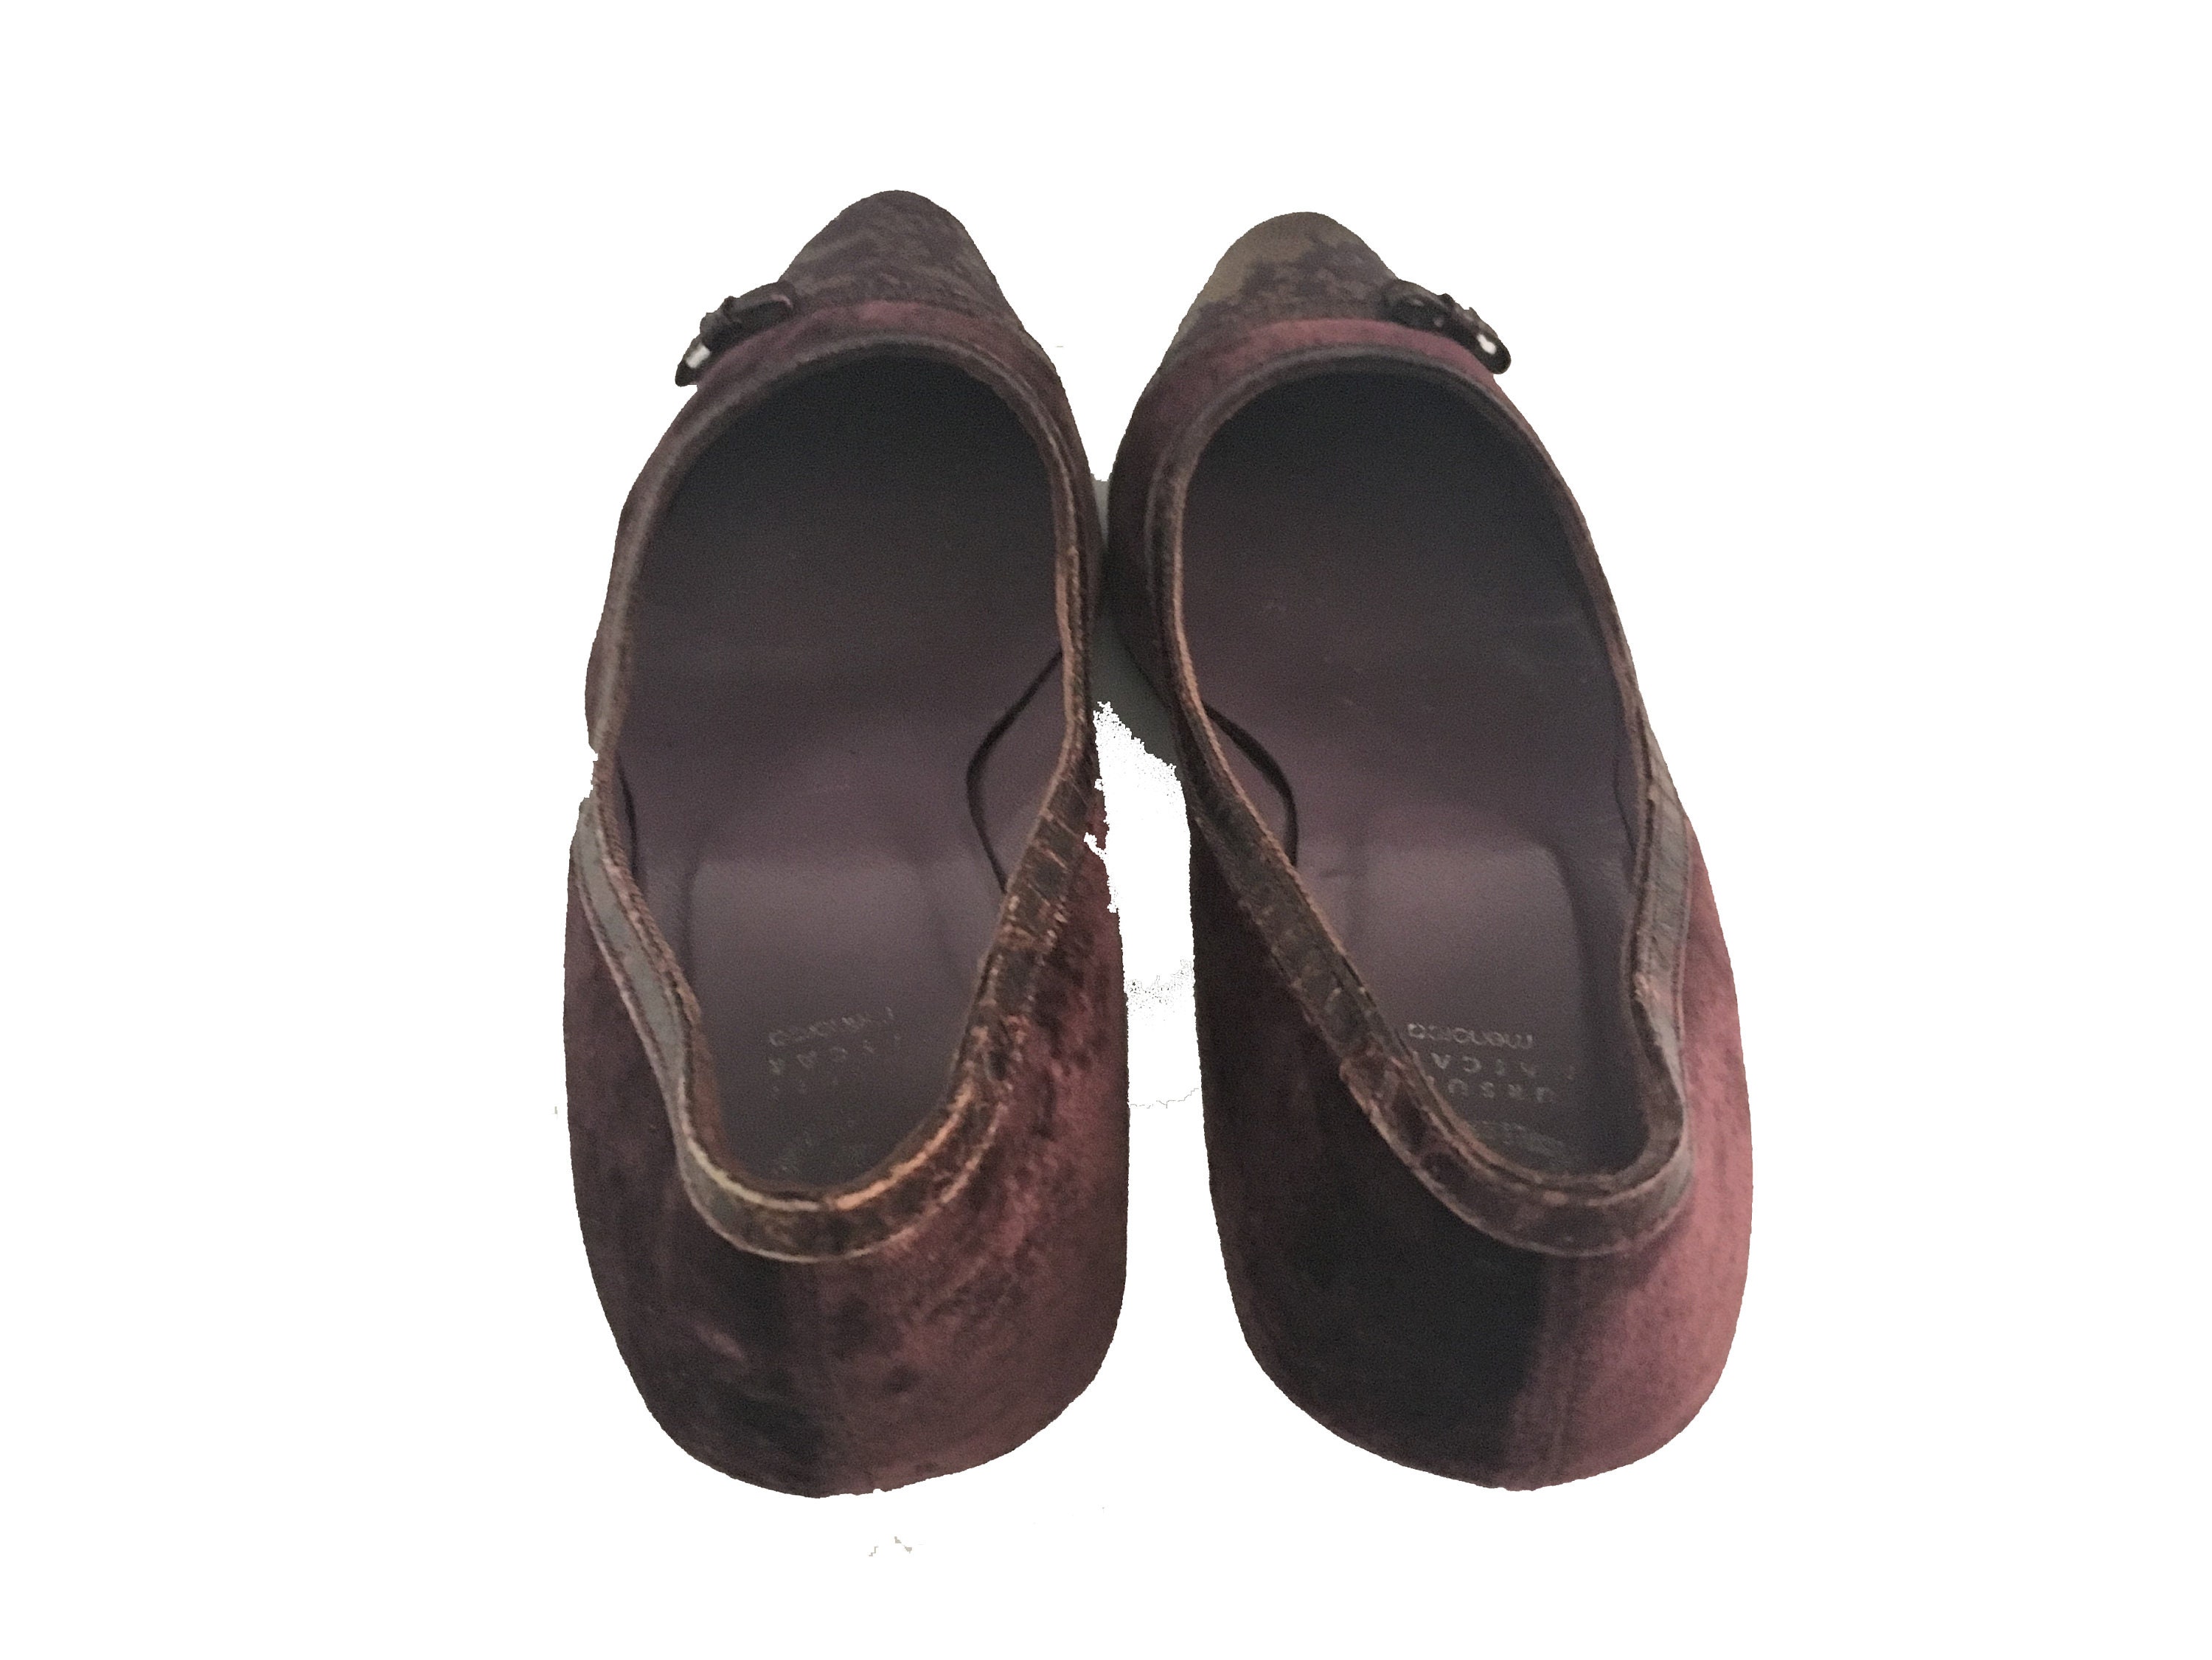 Vintage URSULA MASCARO Elegant Velvet Low Heel Shoes | Etsy